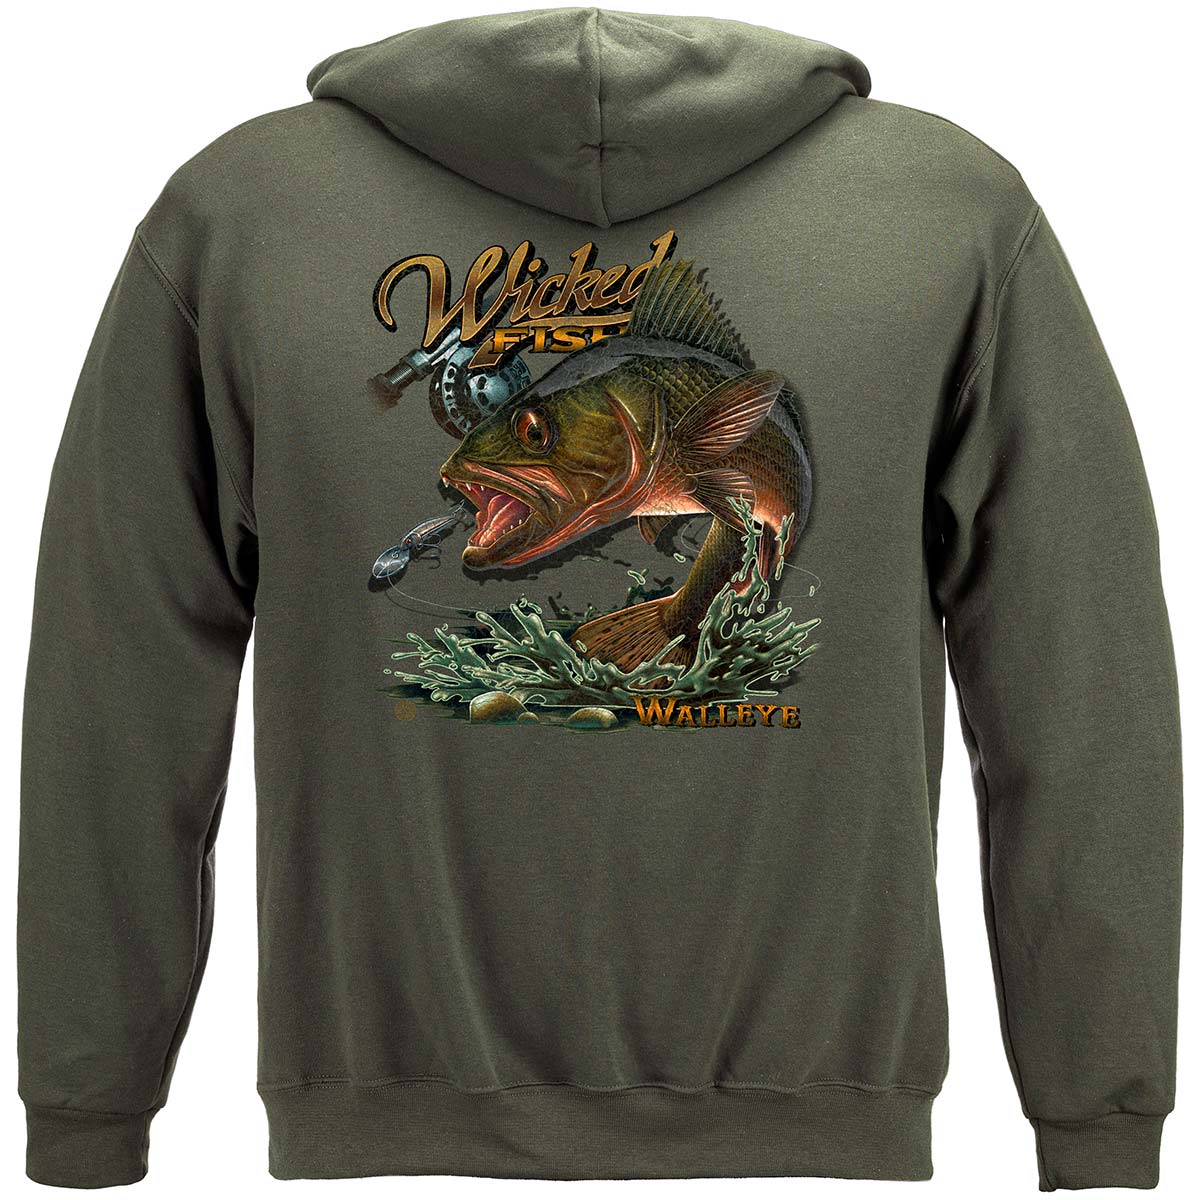 Wicked Fish Walleye Premium T-Shirt